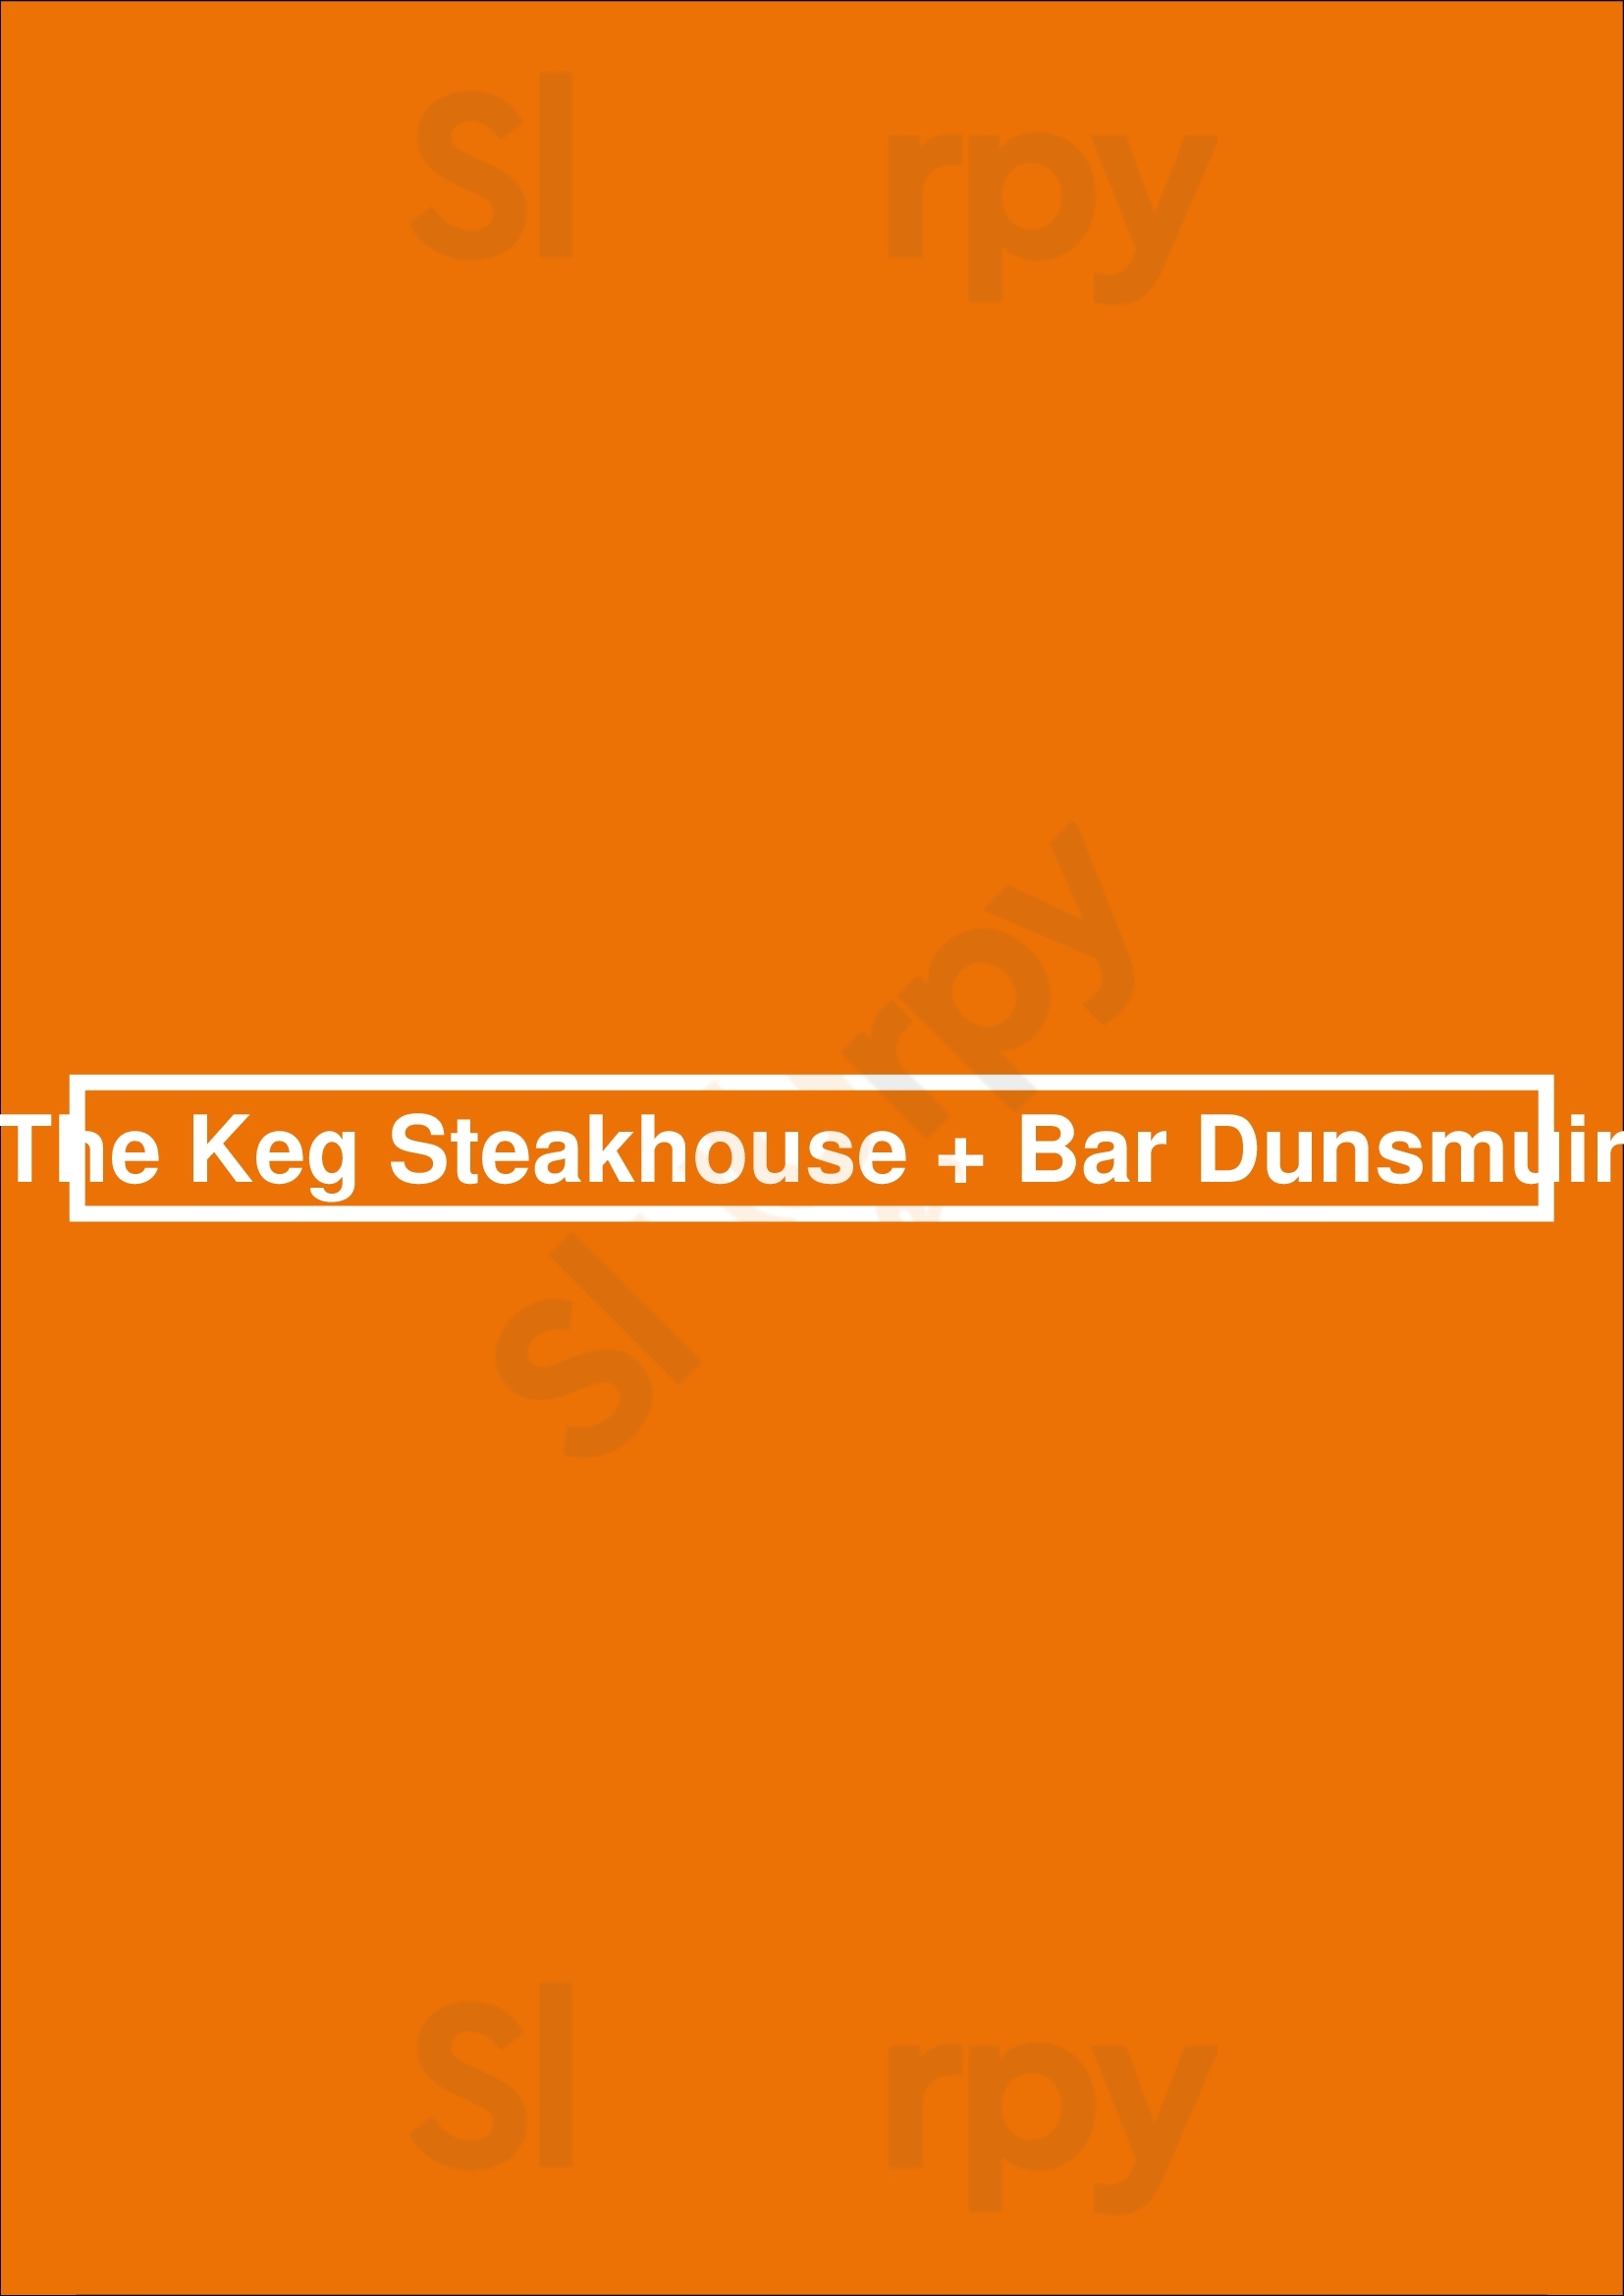 The Keg Steakhouse + Bar - Dunsmuir Vancouver Menu - 1